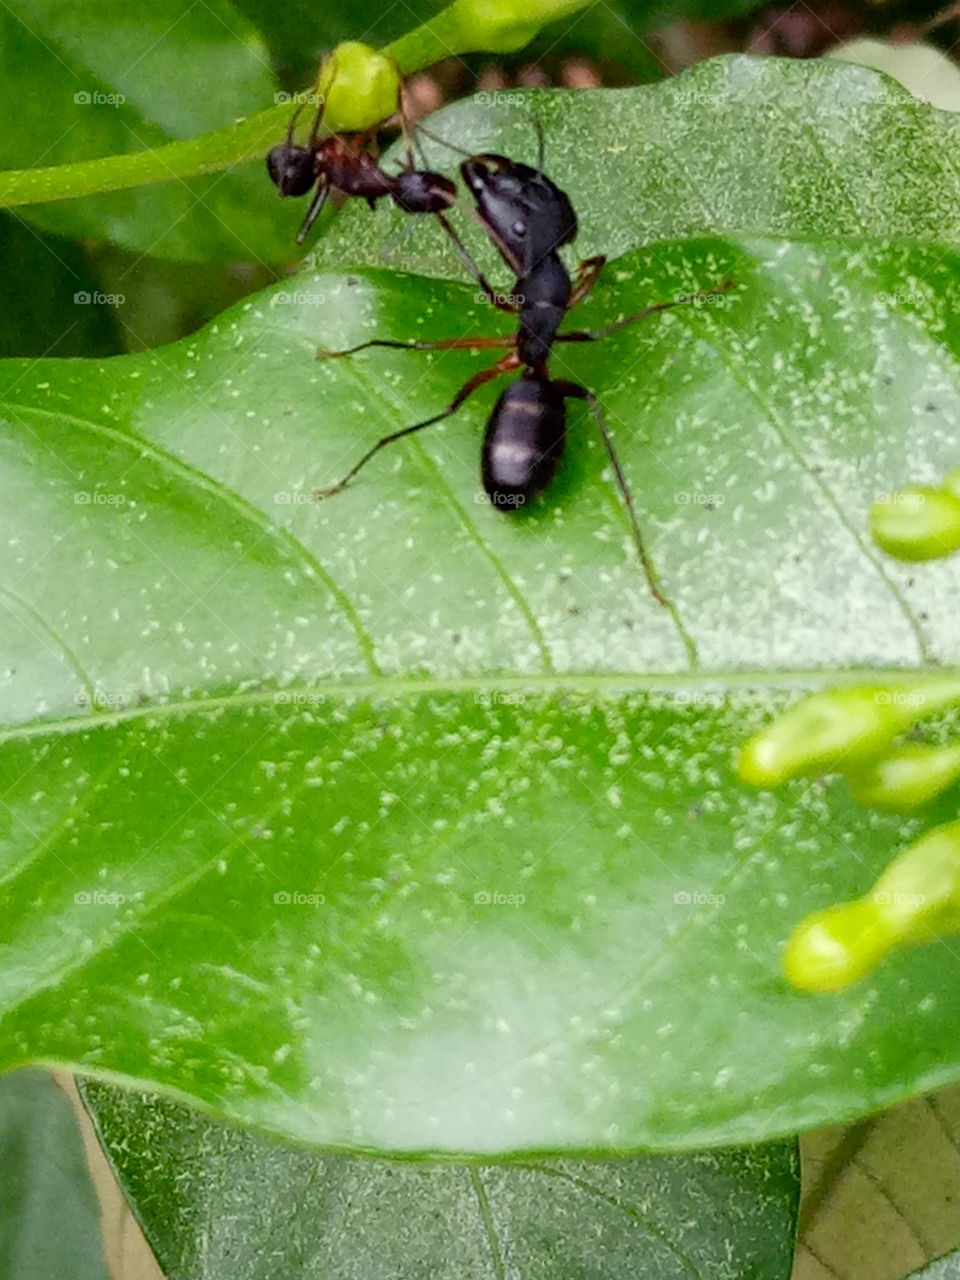 meet black ant's